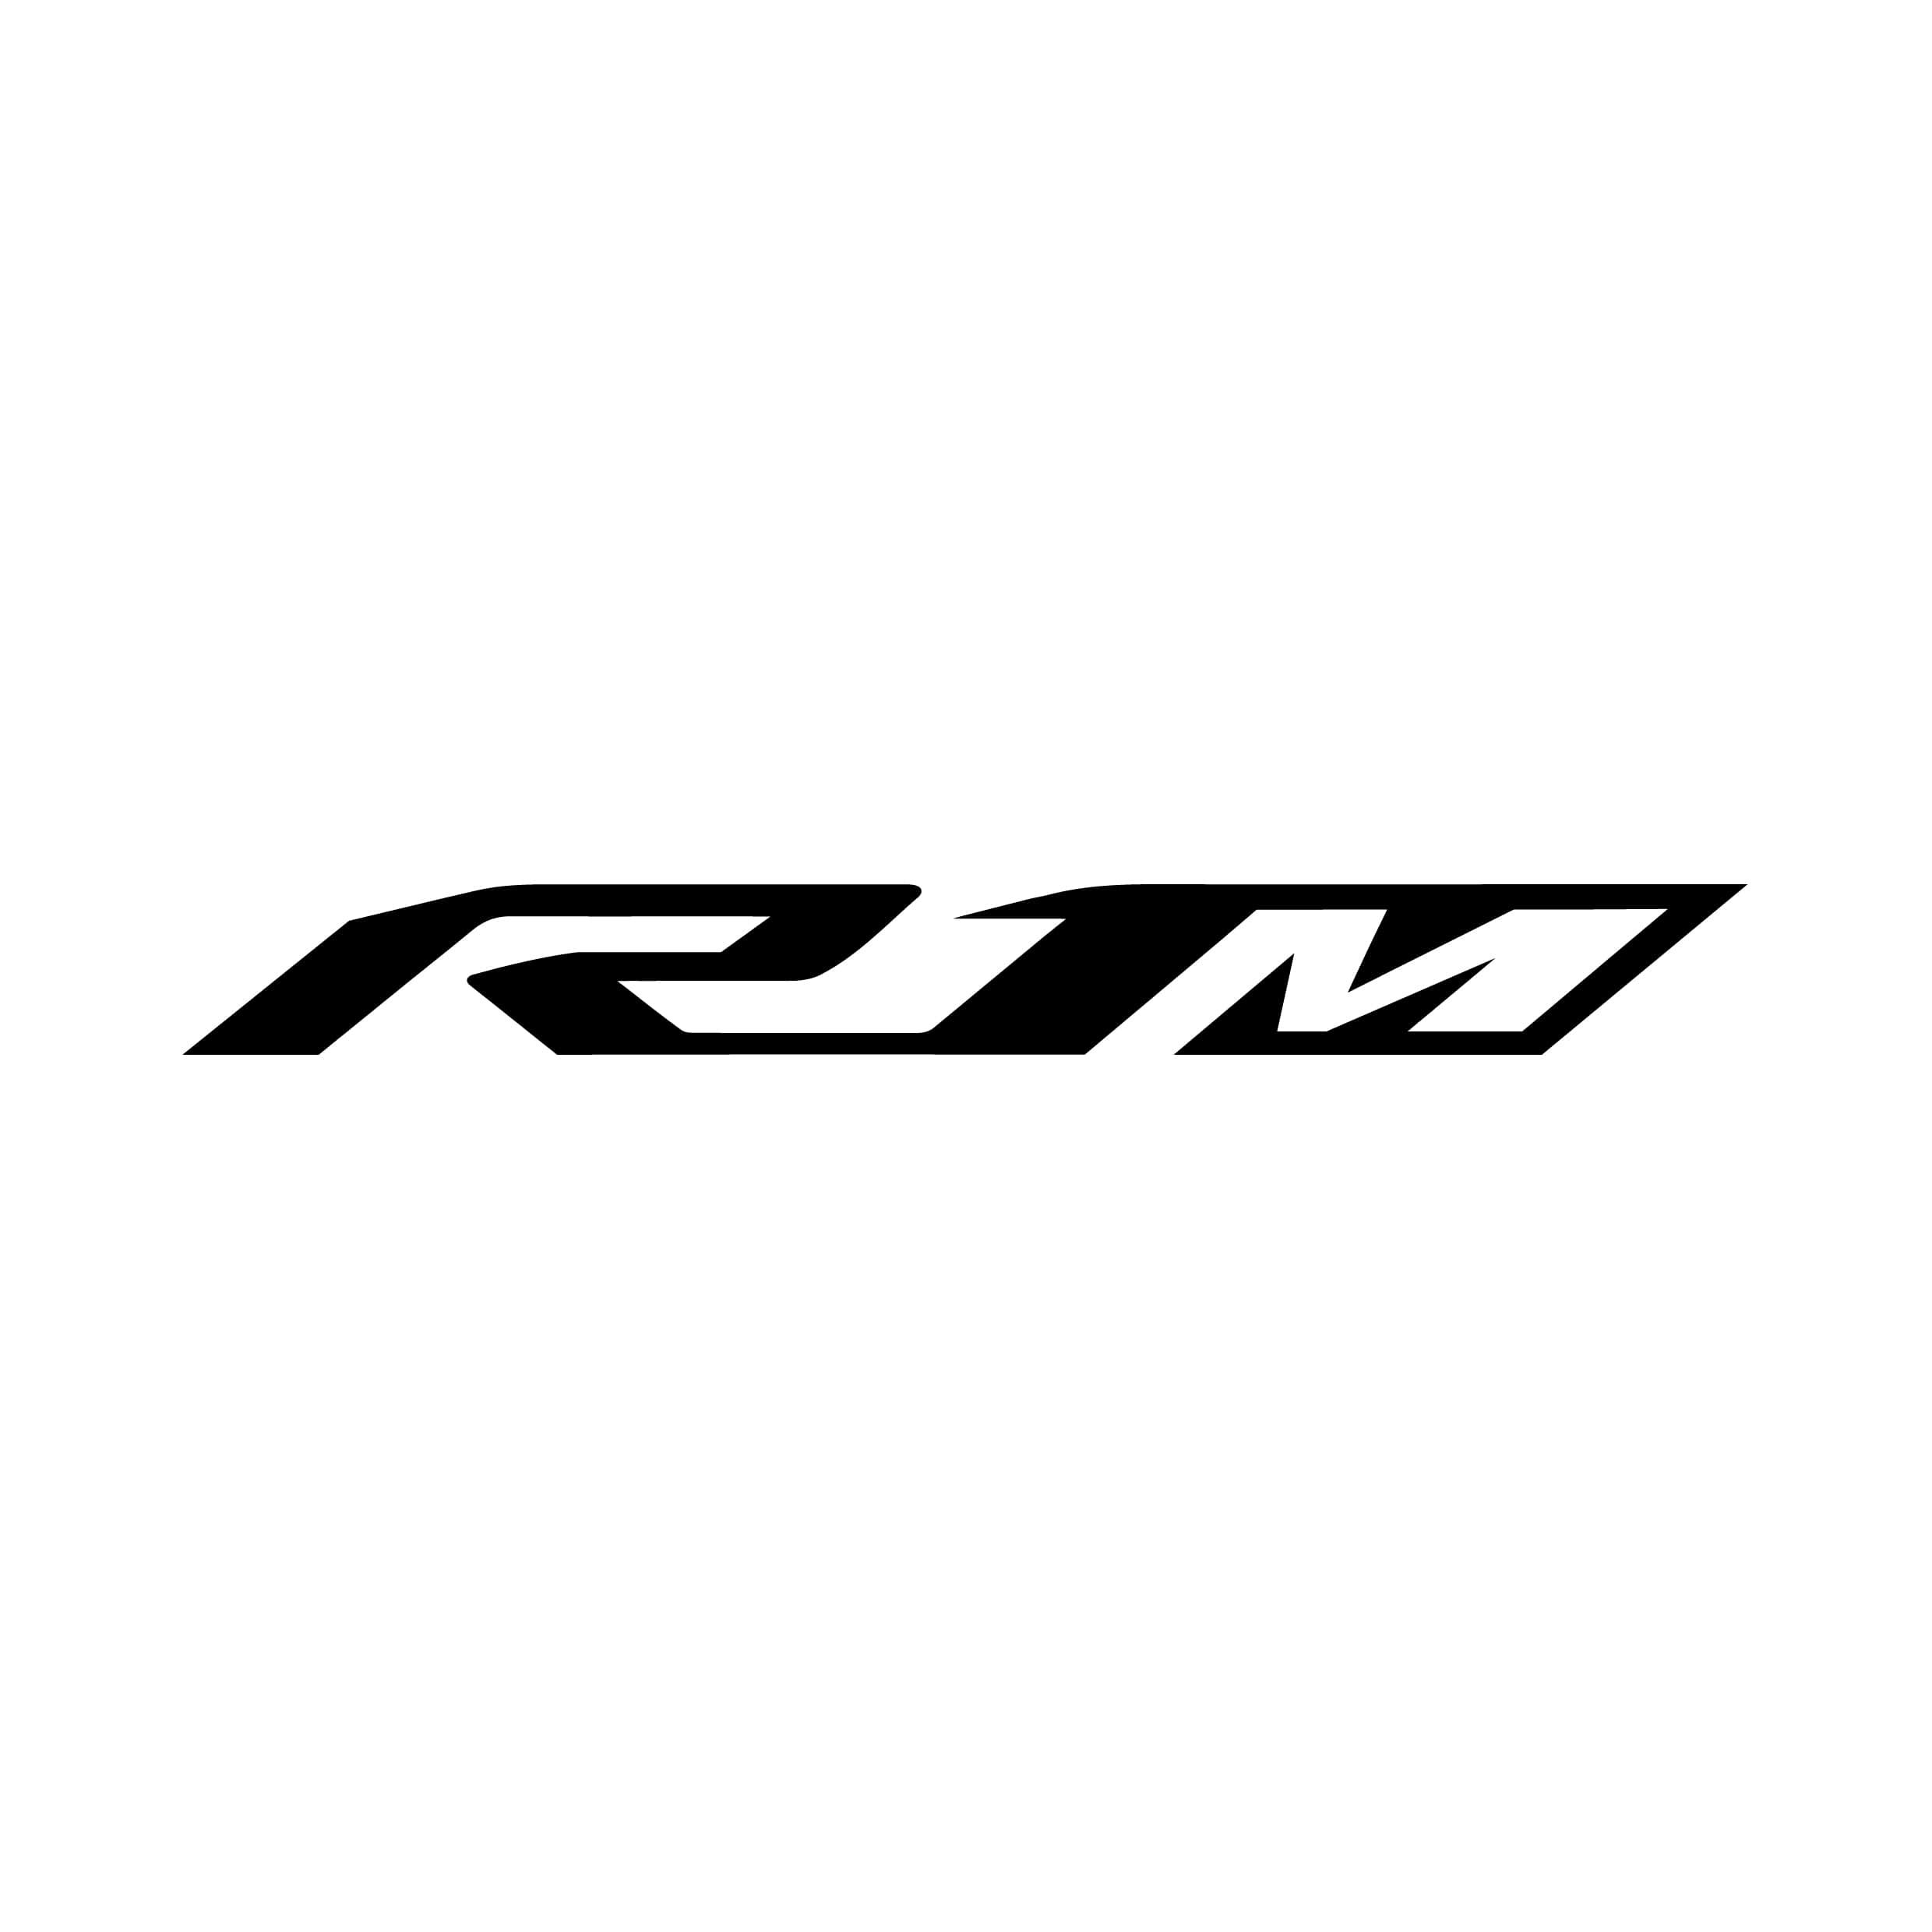 stickers-r1m-yamaha-ref74-autocollant-moto-sticker-deux-roue-autocollants-decals-sponsors-tuning-sport-logo-bike-scooter-min